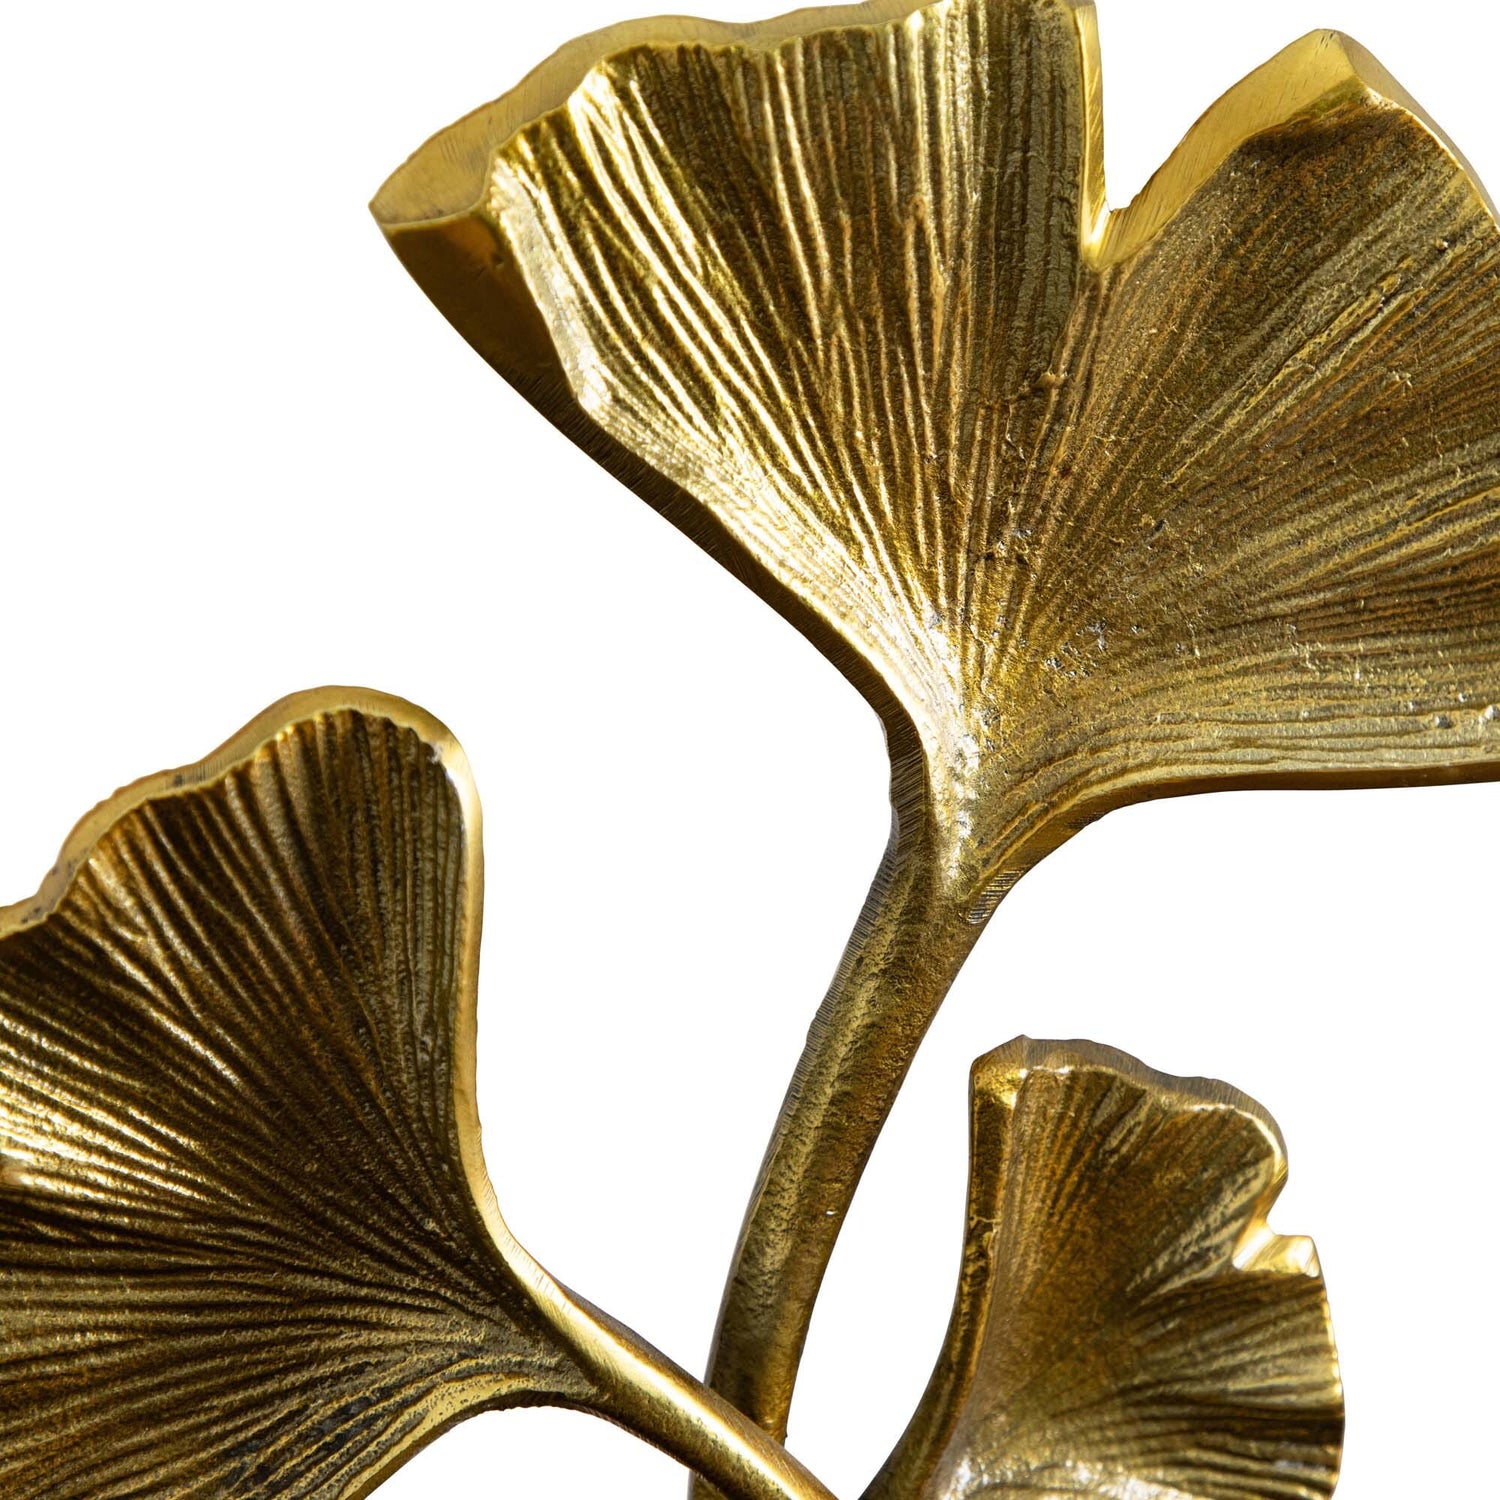 15" Gold Leaf Statue Decorative Accent